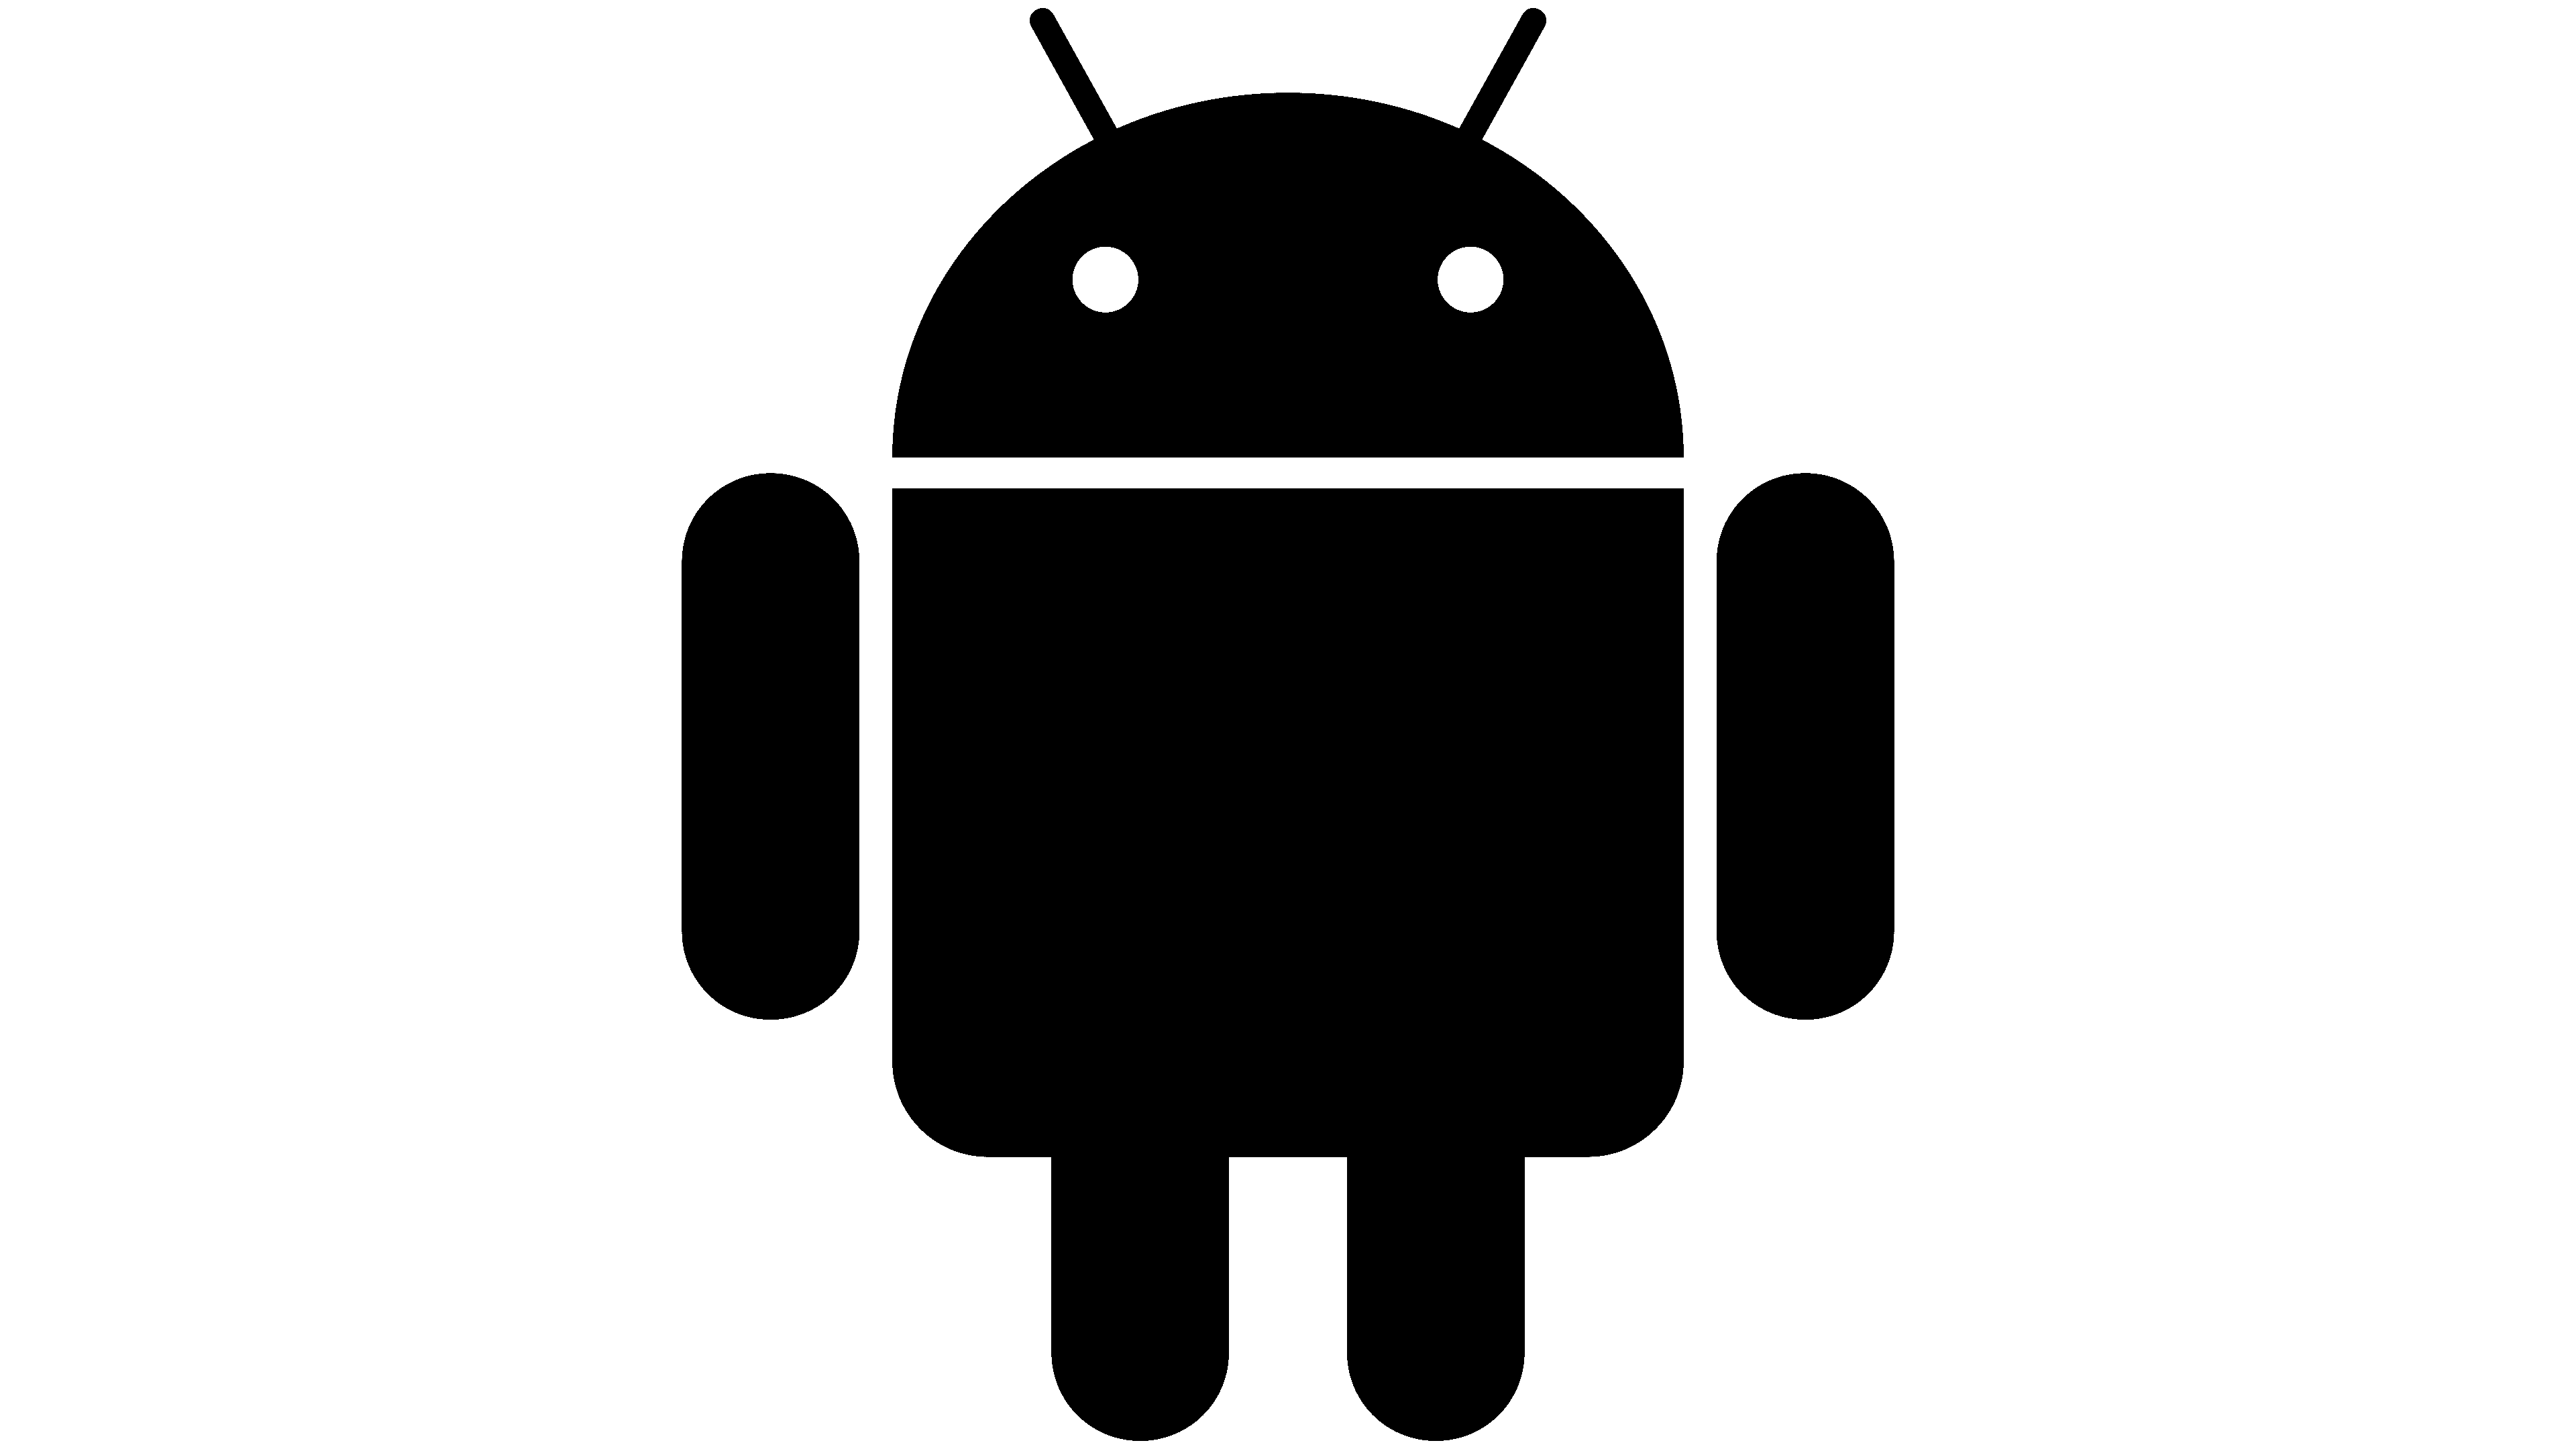 Андроид ссылку на сайт на рабочий стол. Логотип андроид. Значее пндроид. Иконка Android. Андроид логотип на прозрачном фоне.